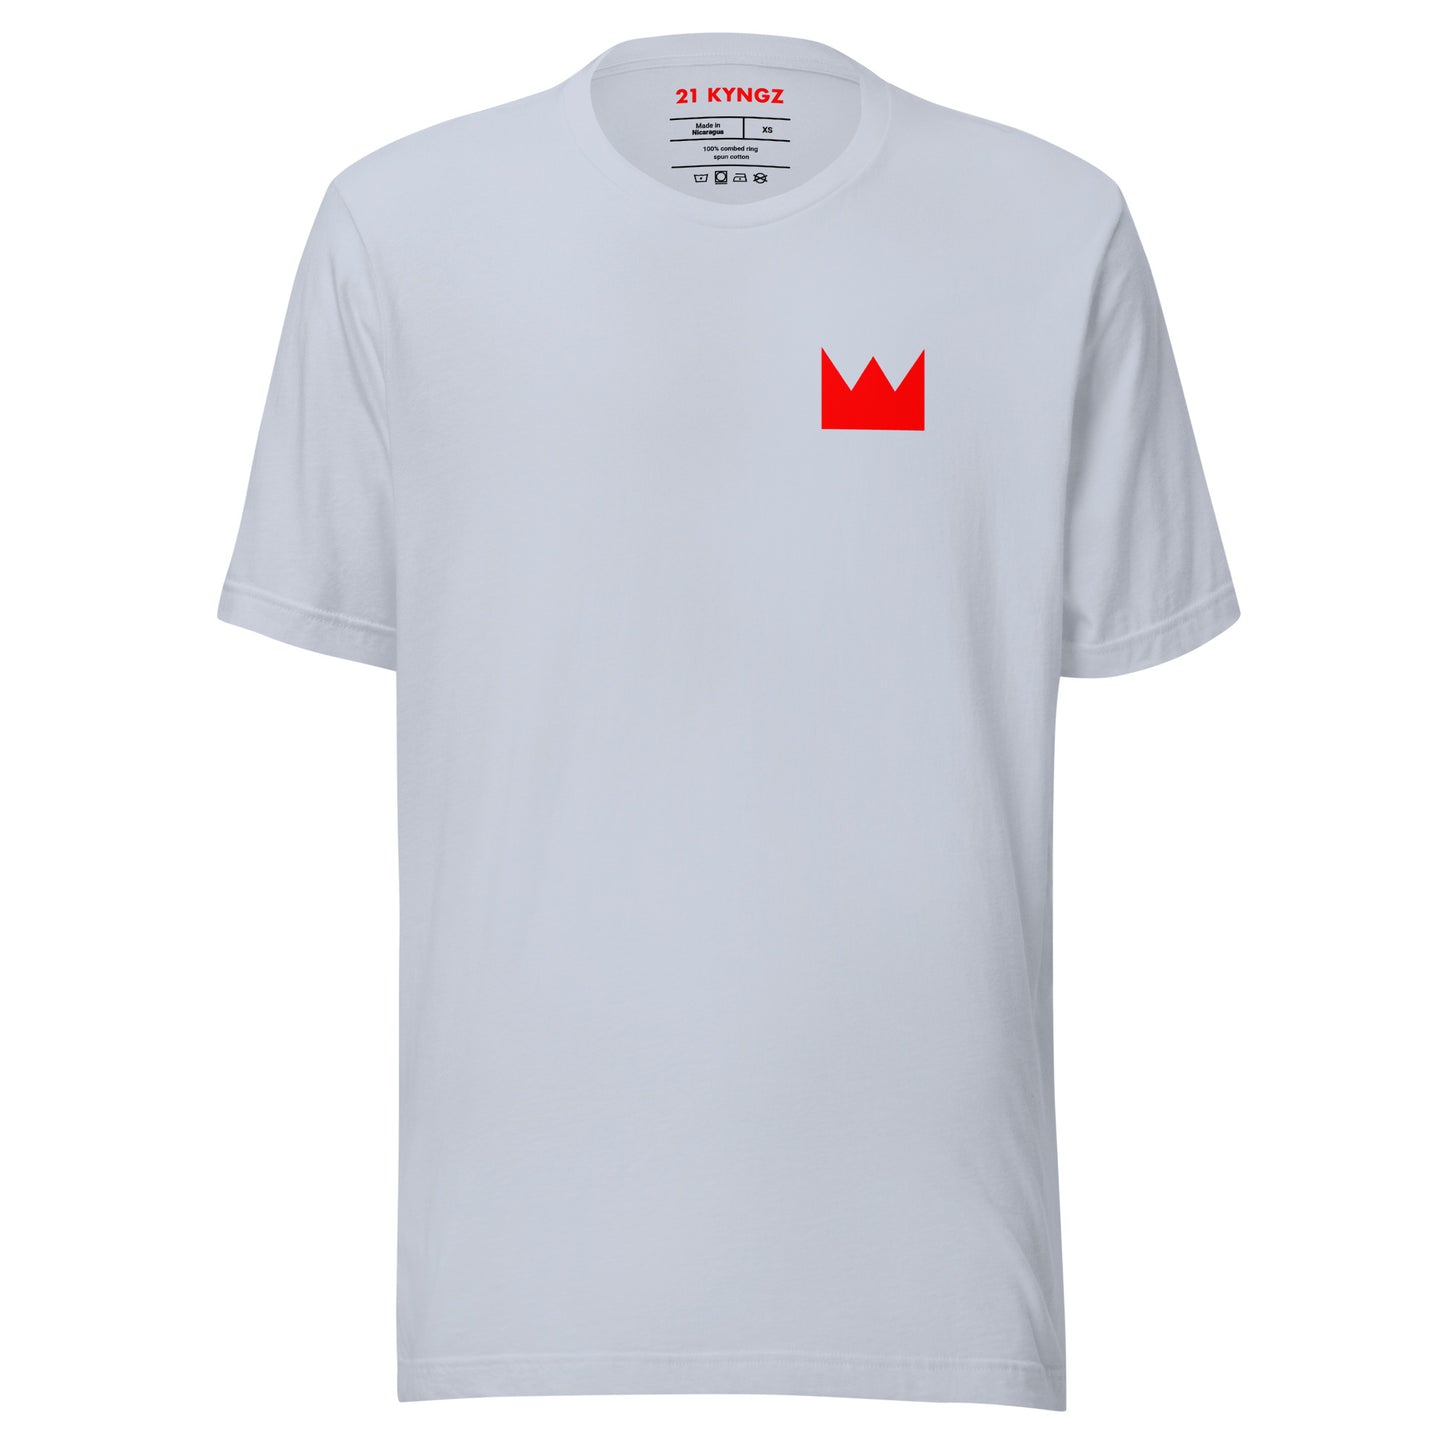 21 KYNGZ Little Crown (R) Unisex t-shirt